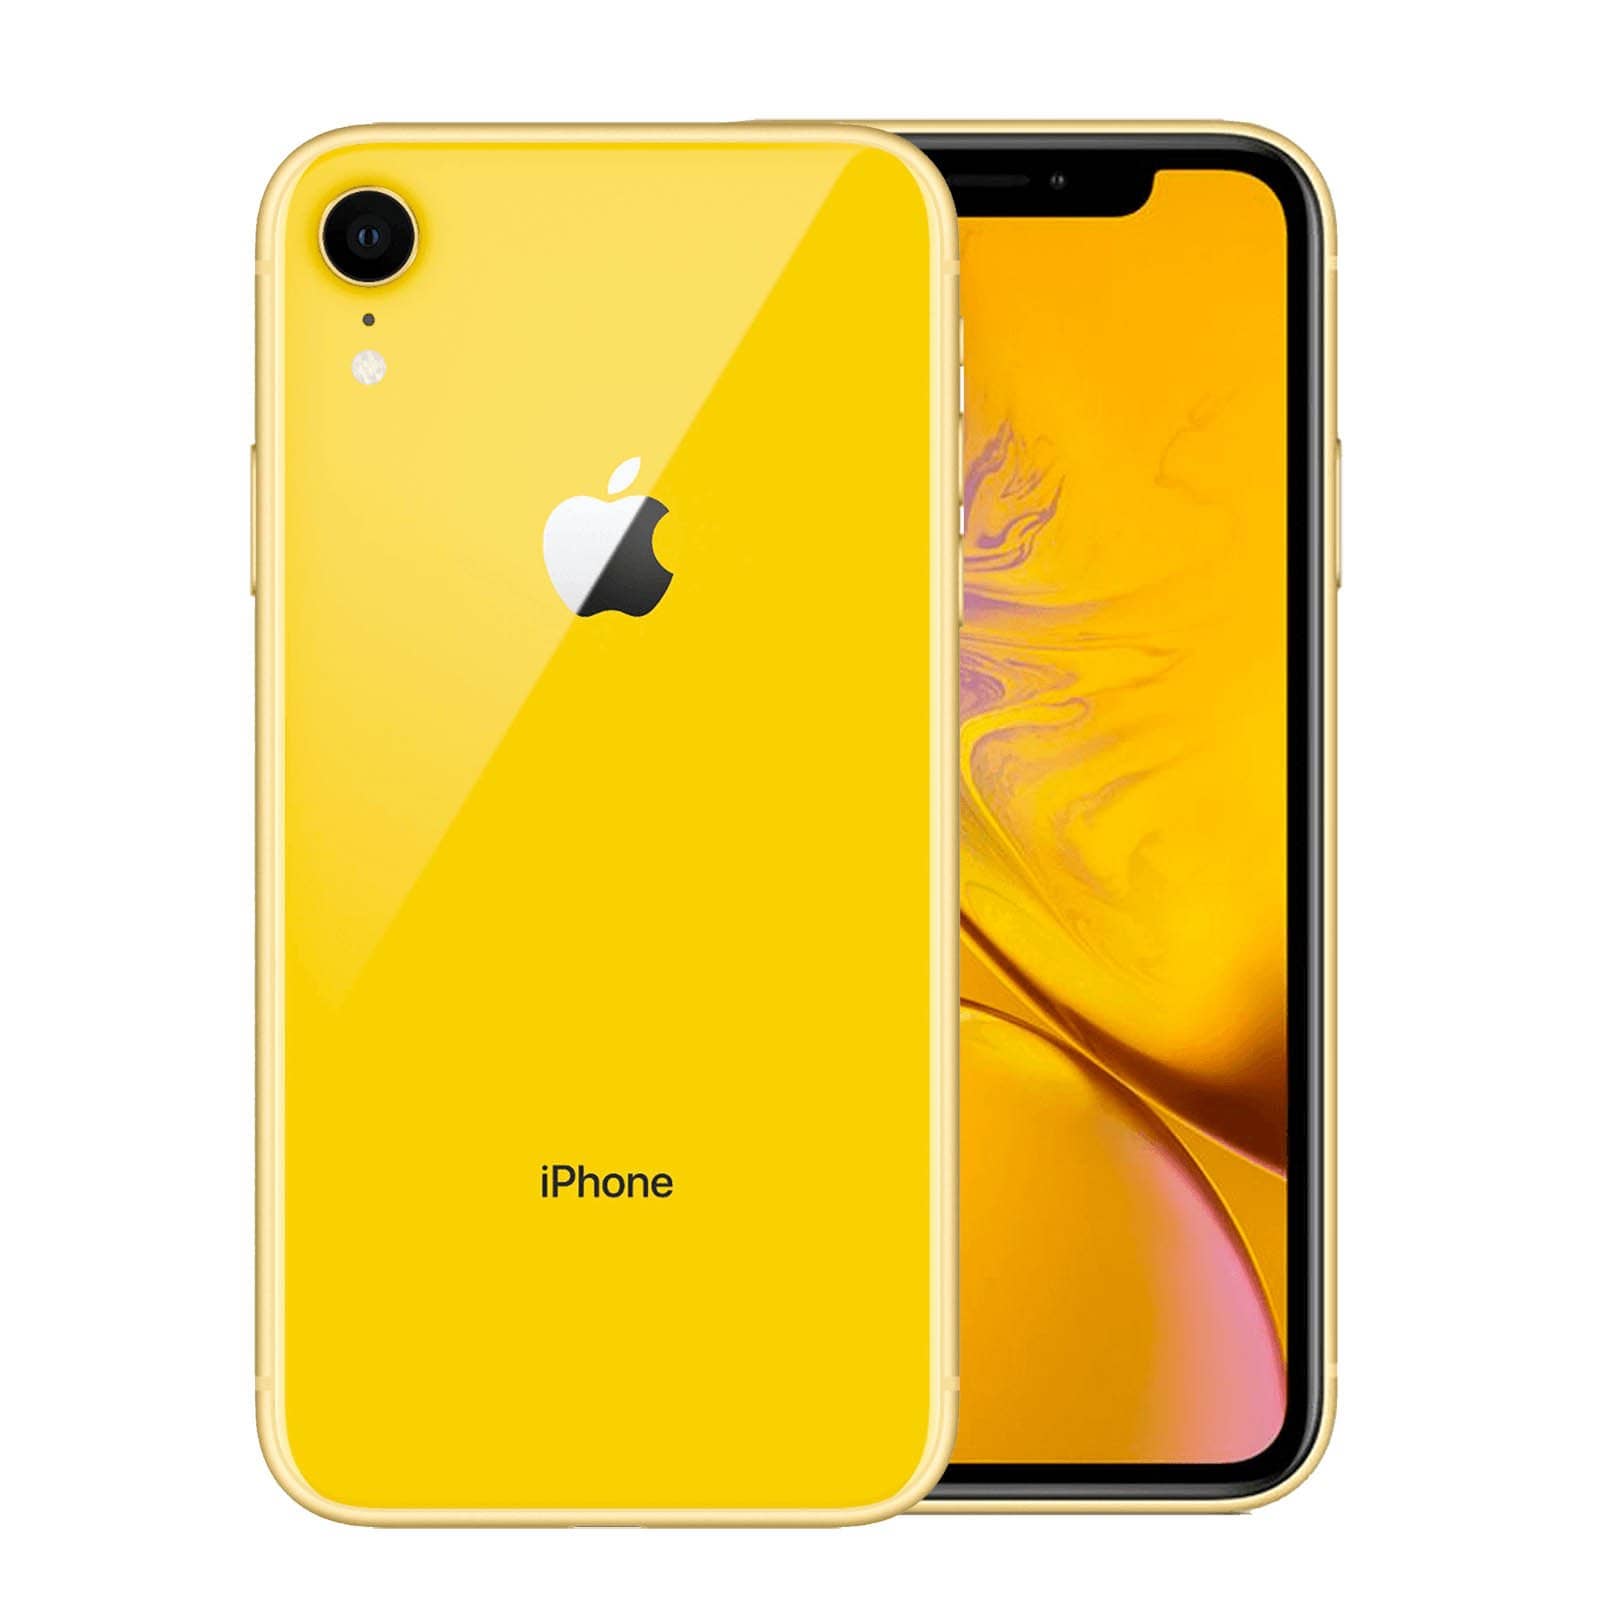 Apple iPhone XR 64GB Yellow Very Good - Unlocked 64GB Yellow Very Good